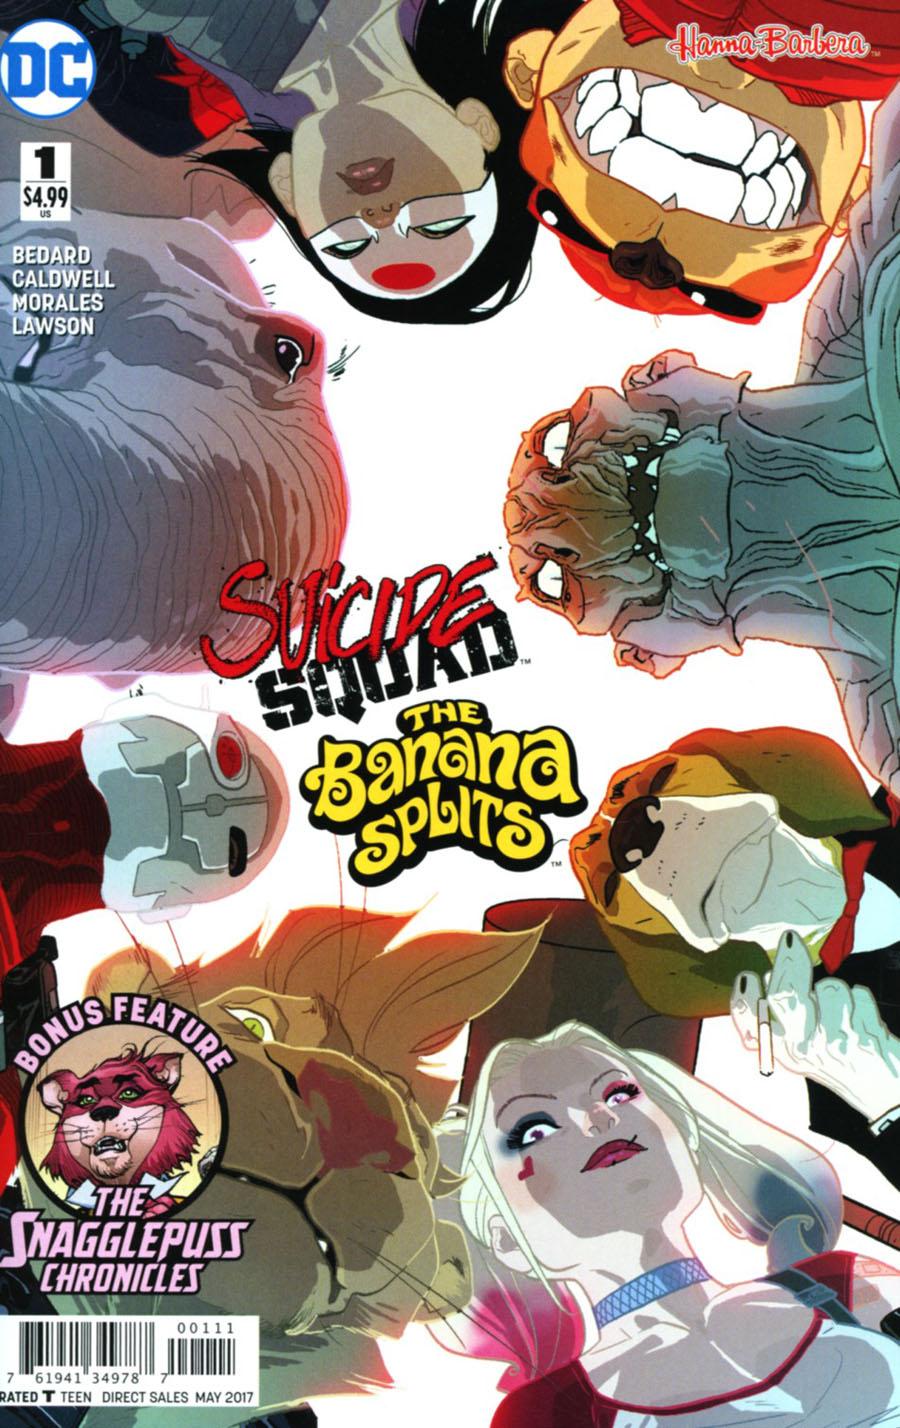 Suicide Squad Banana Splits Special Vol. 1 #1